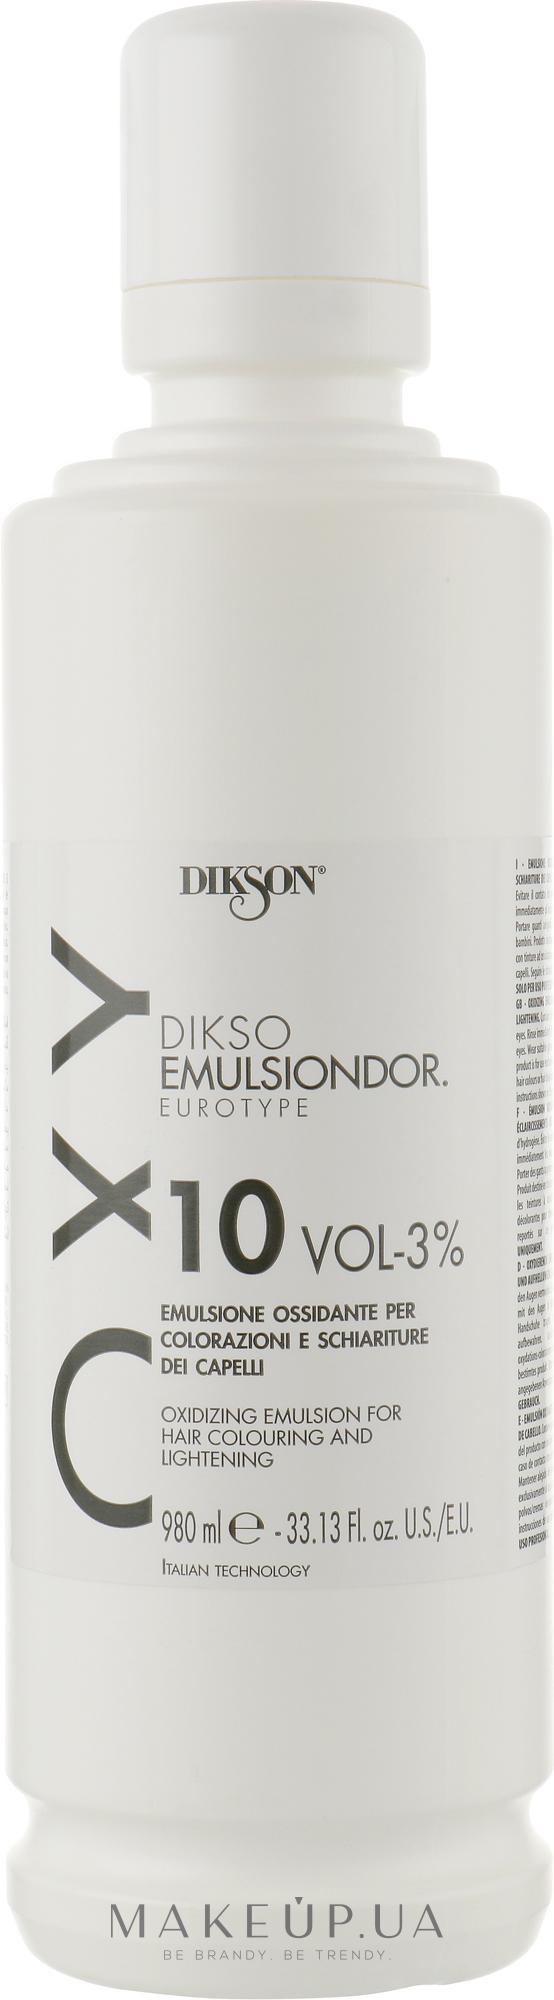 Окислювач для волосся - Dikson Oxy Oxidizing Emulsion For Hair Colouring And Lightening 10 Vol-3% — фото 980ml